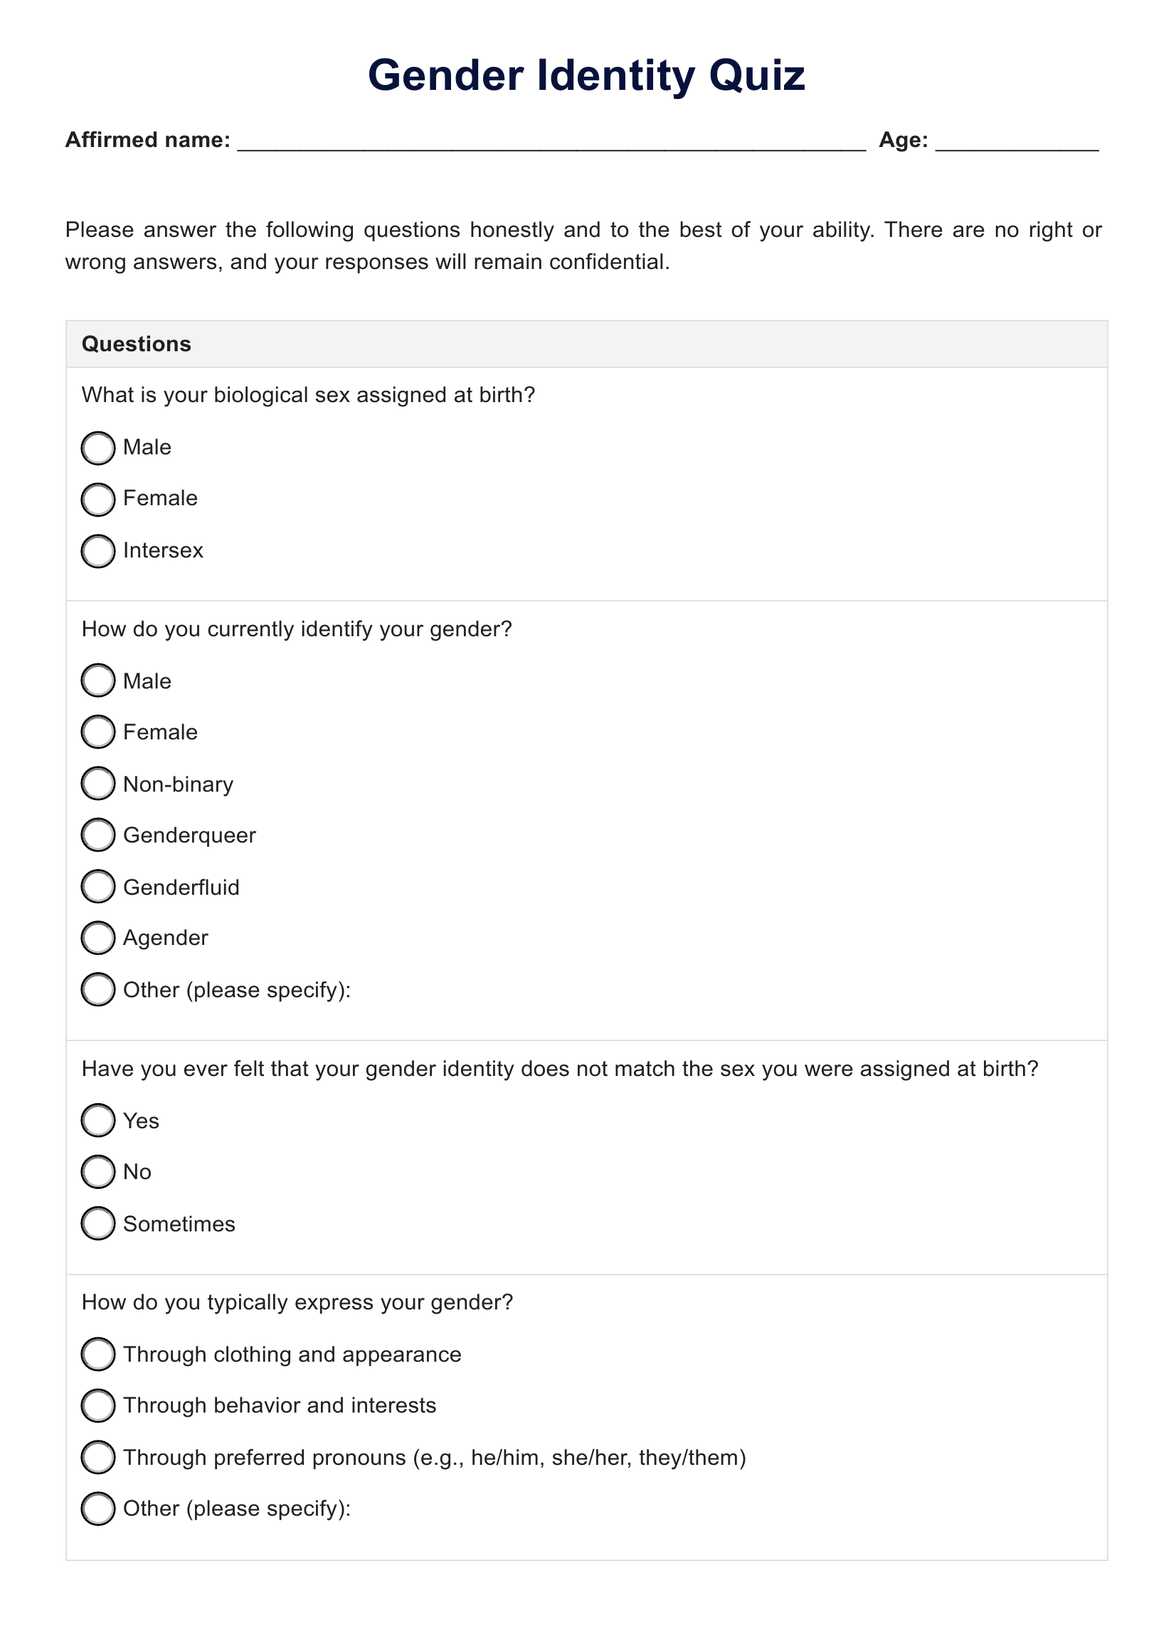 Gender Identity Quiz PDF Example